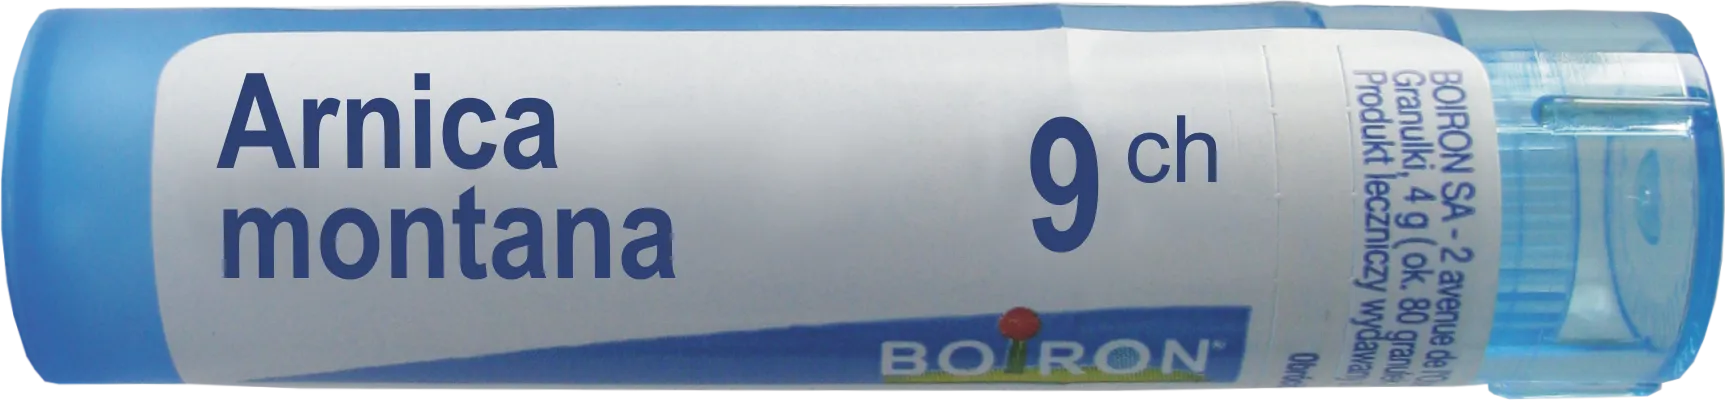 Boiron, Arnica montana 9 CH, granulki, 4 g